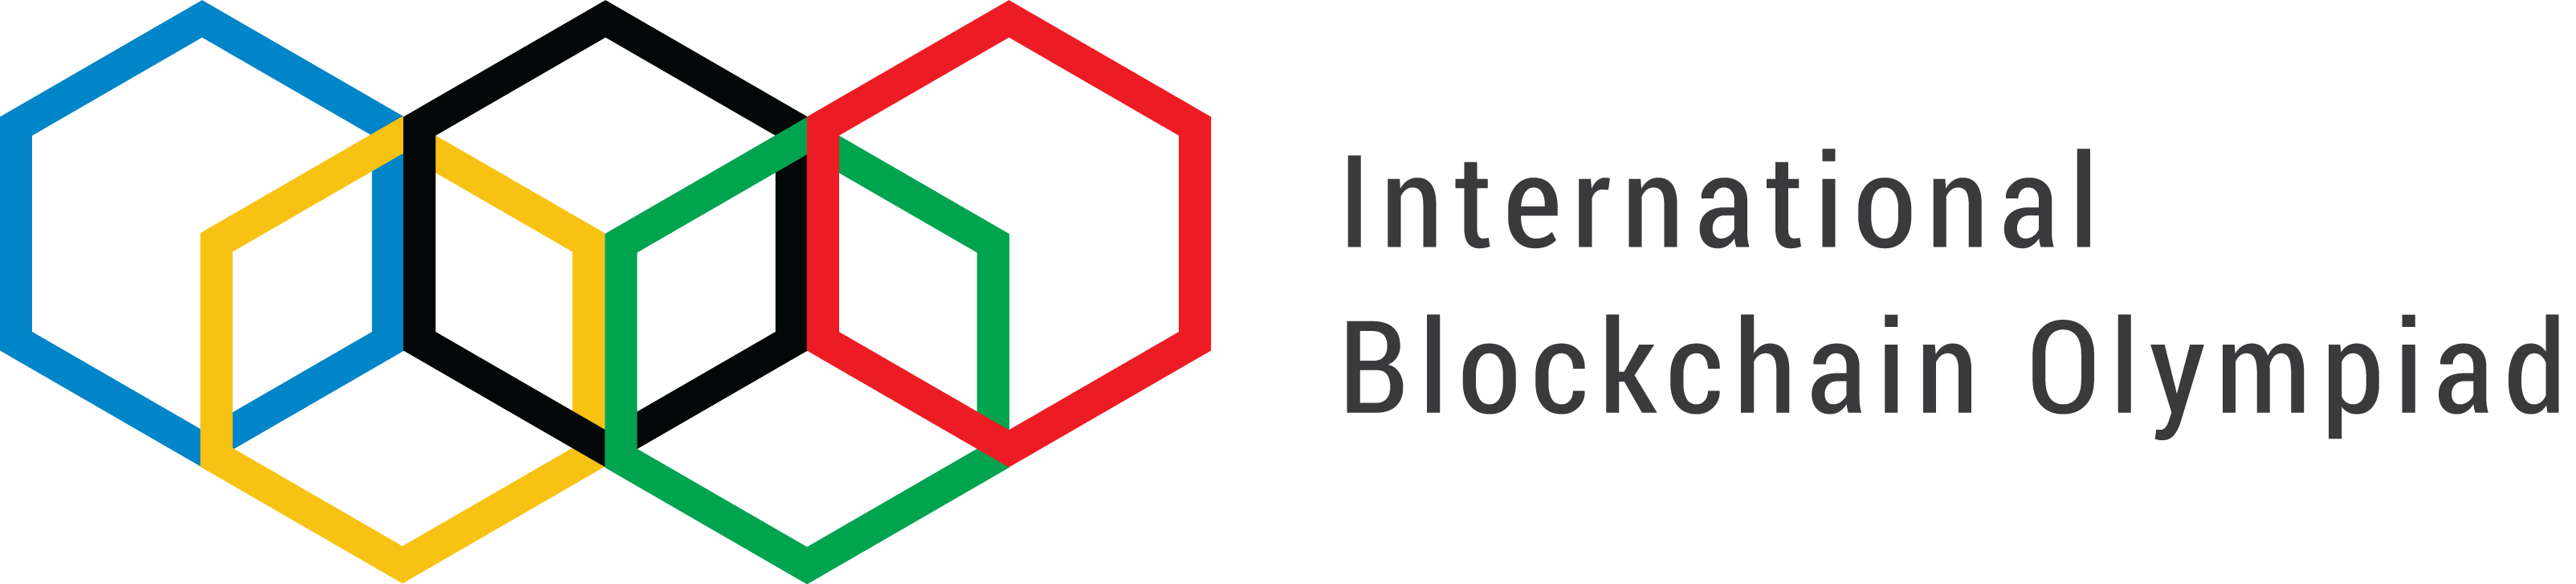 International Blockchain Olympiad